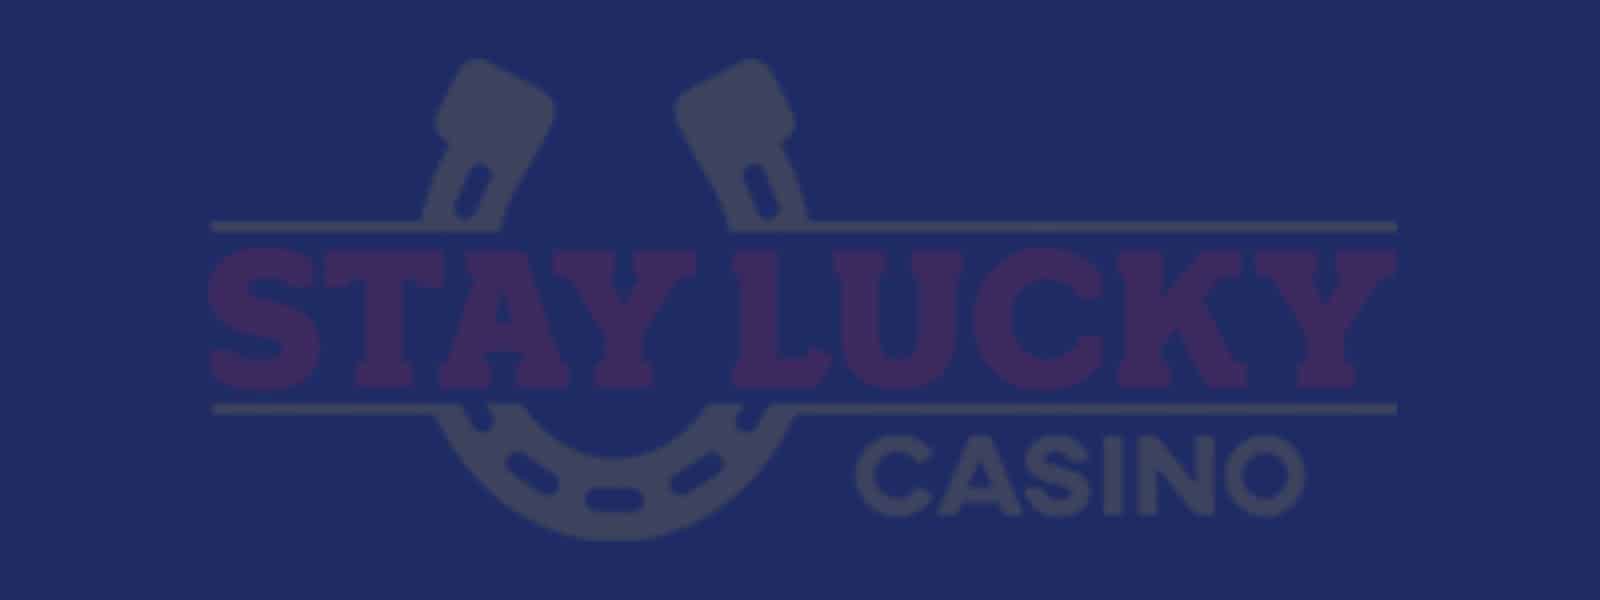 stay lukky casino bg